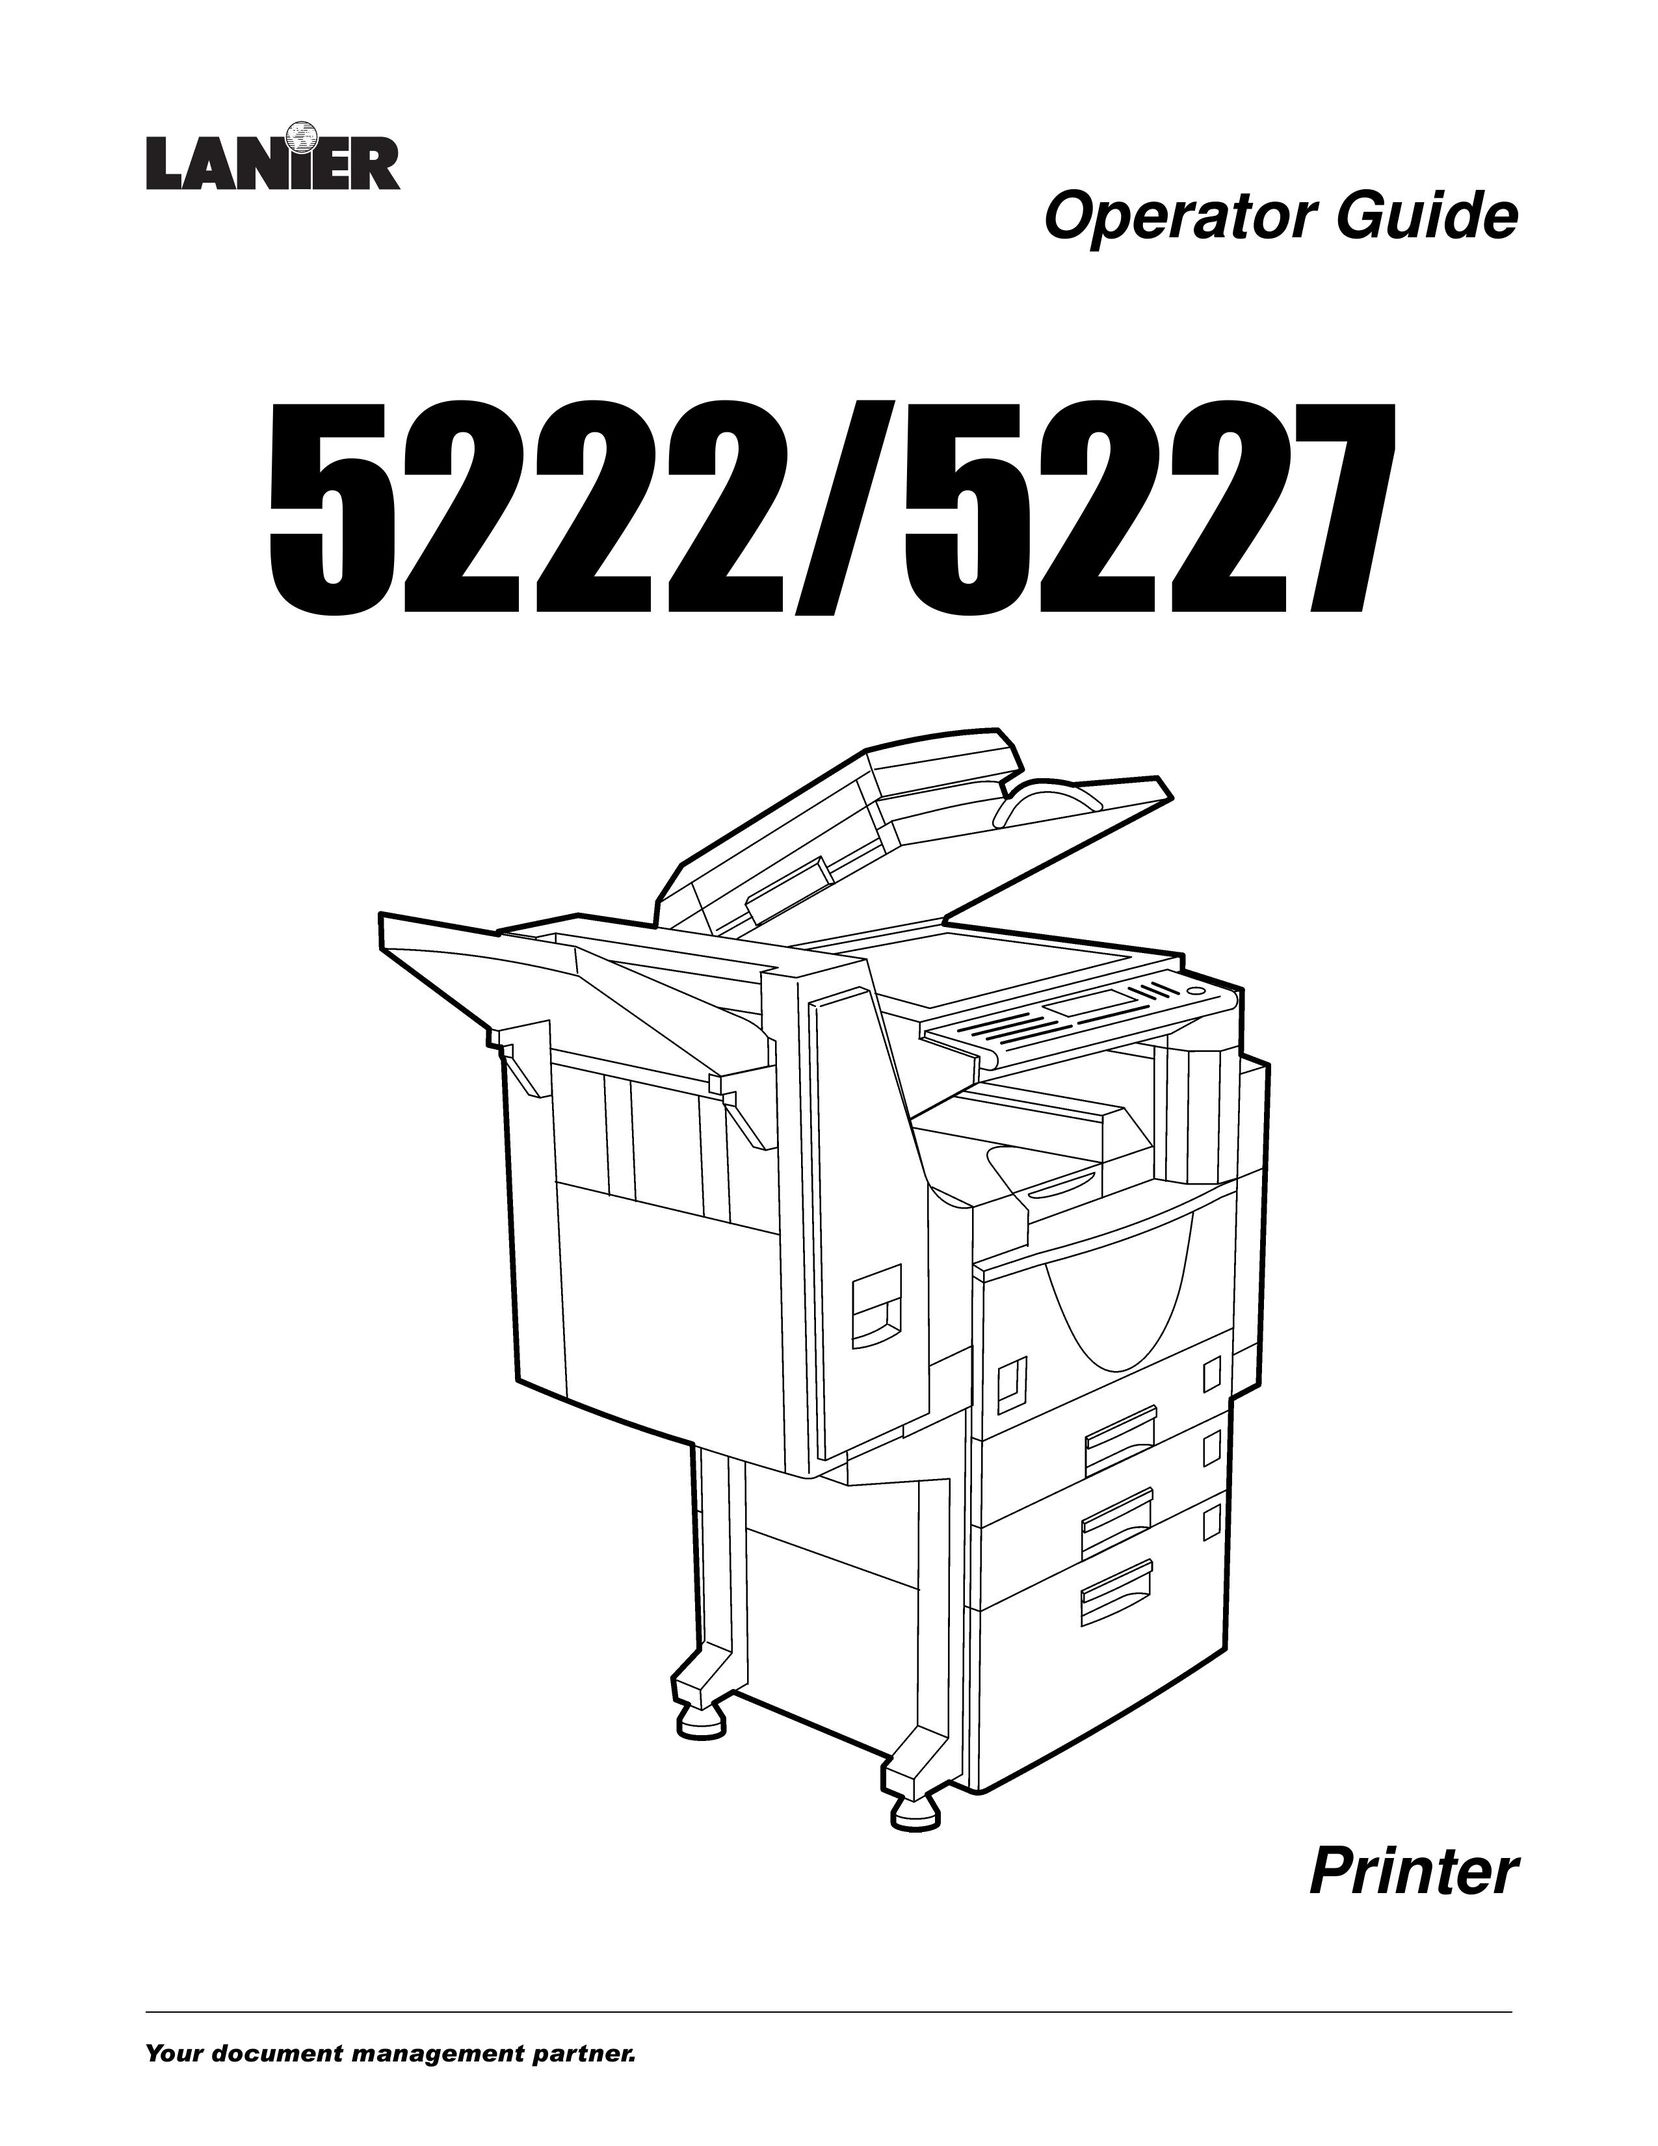 Lanier 5222 All in One Printer User Manual